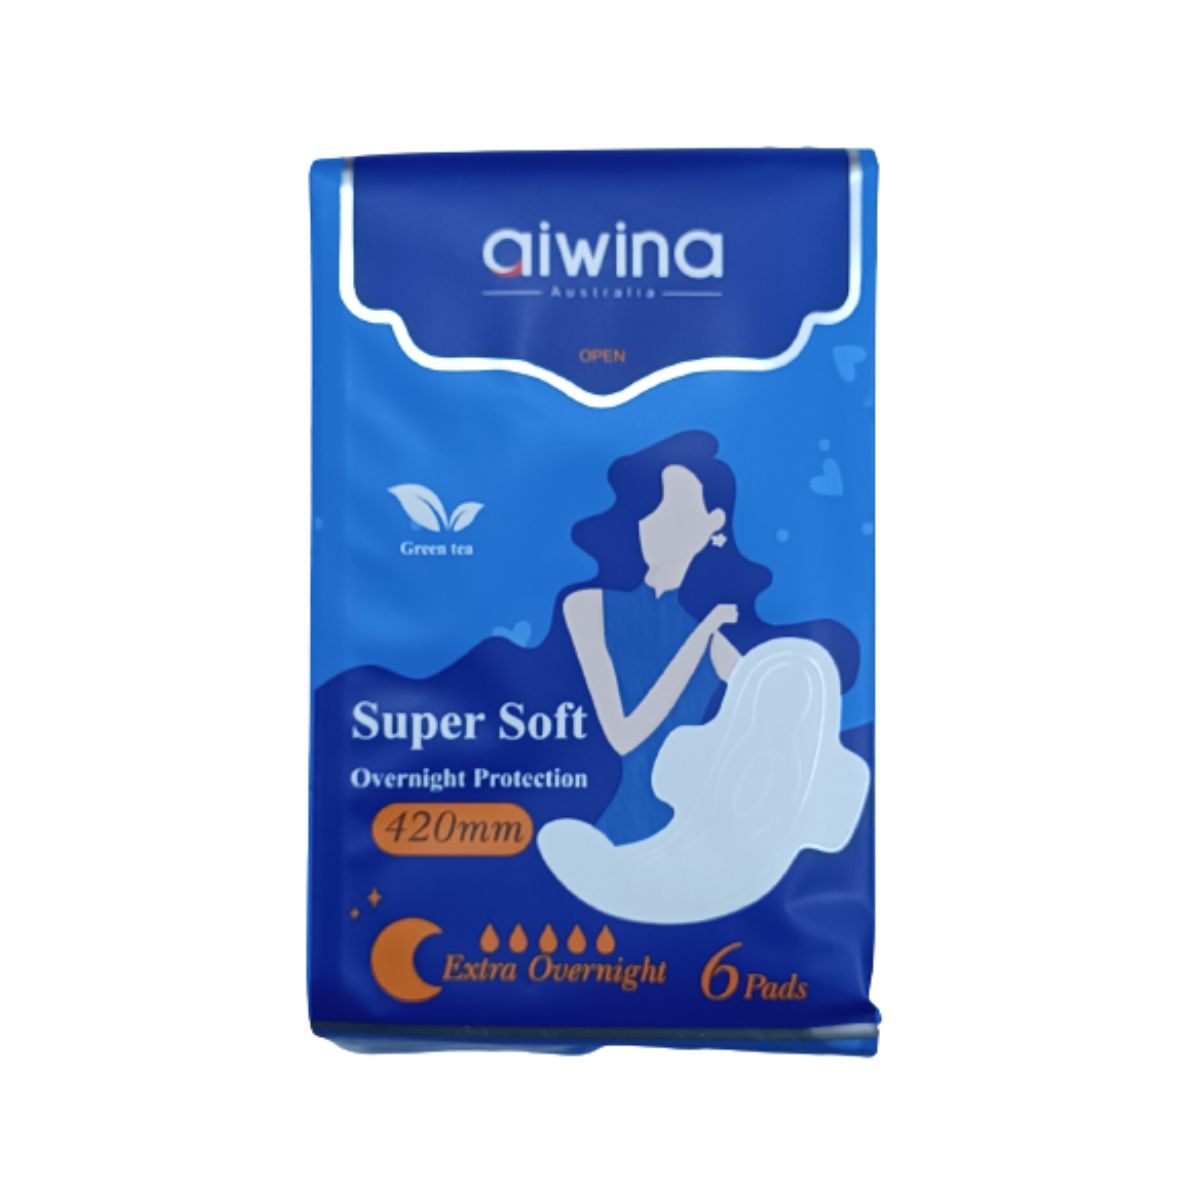 Aiwina Sanitary Napkin - Super Soft - Overnight Protection - Extra Overnight - 420mm - 6pads